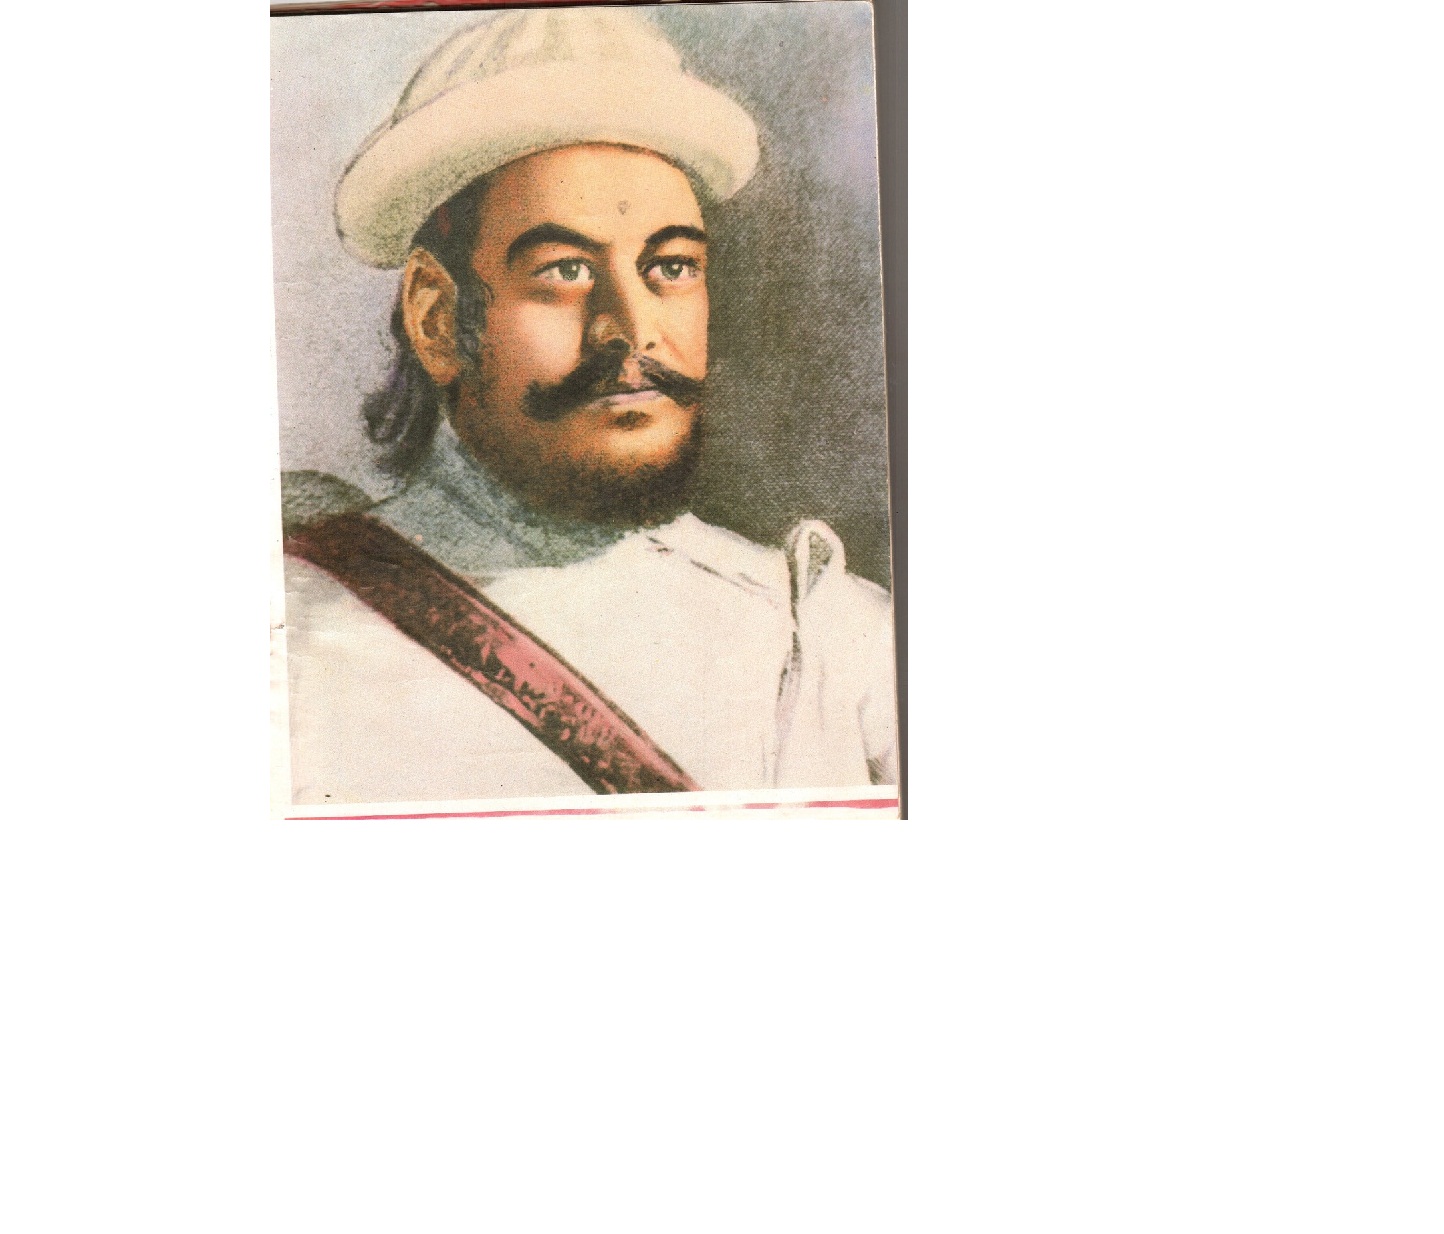 How patriotic was Bada Kaji Amar Singh Thapa?